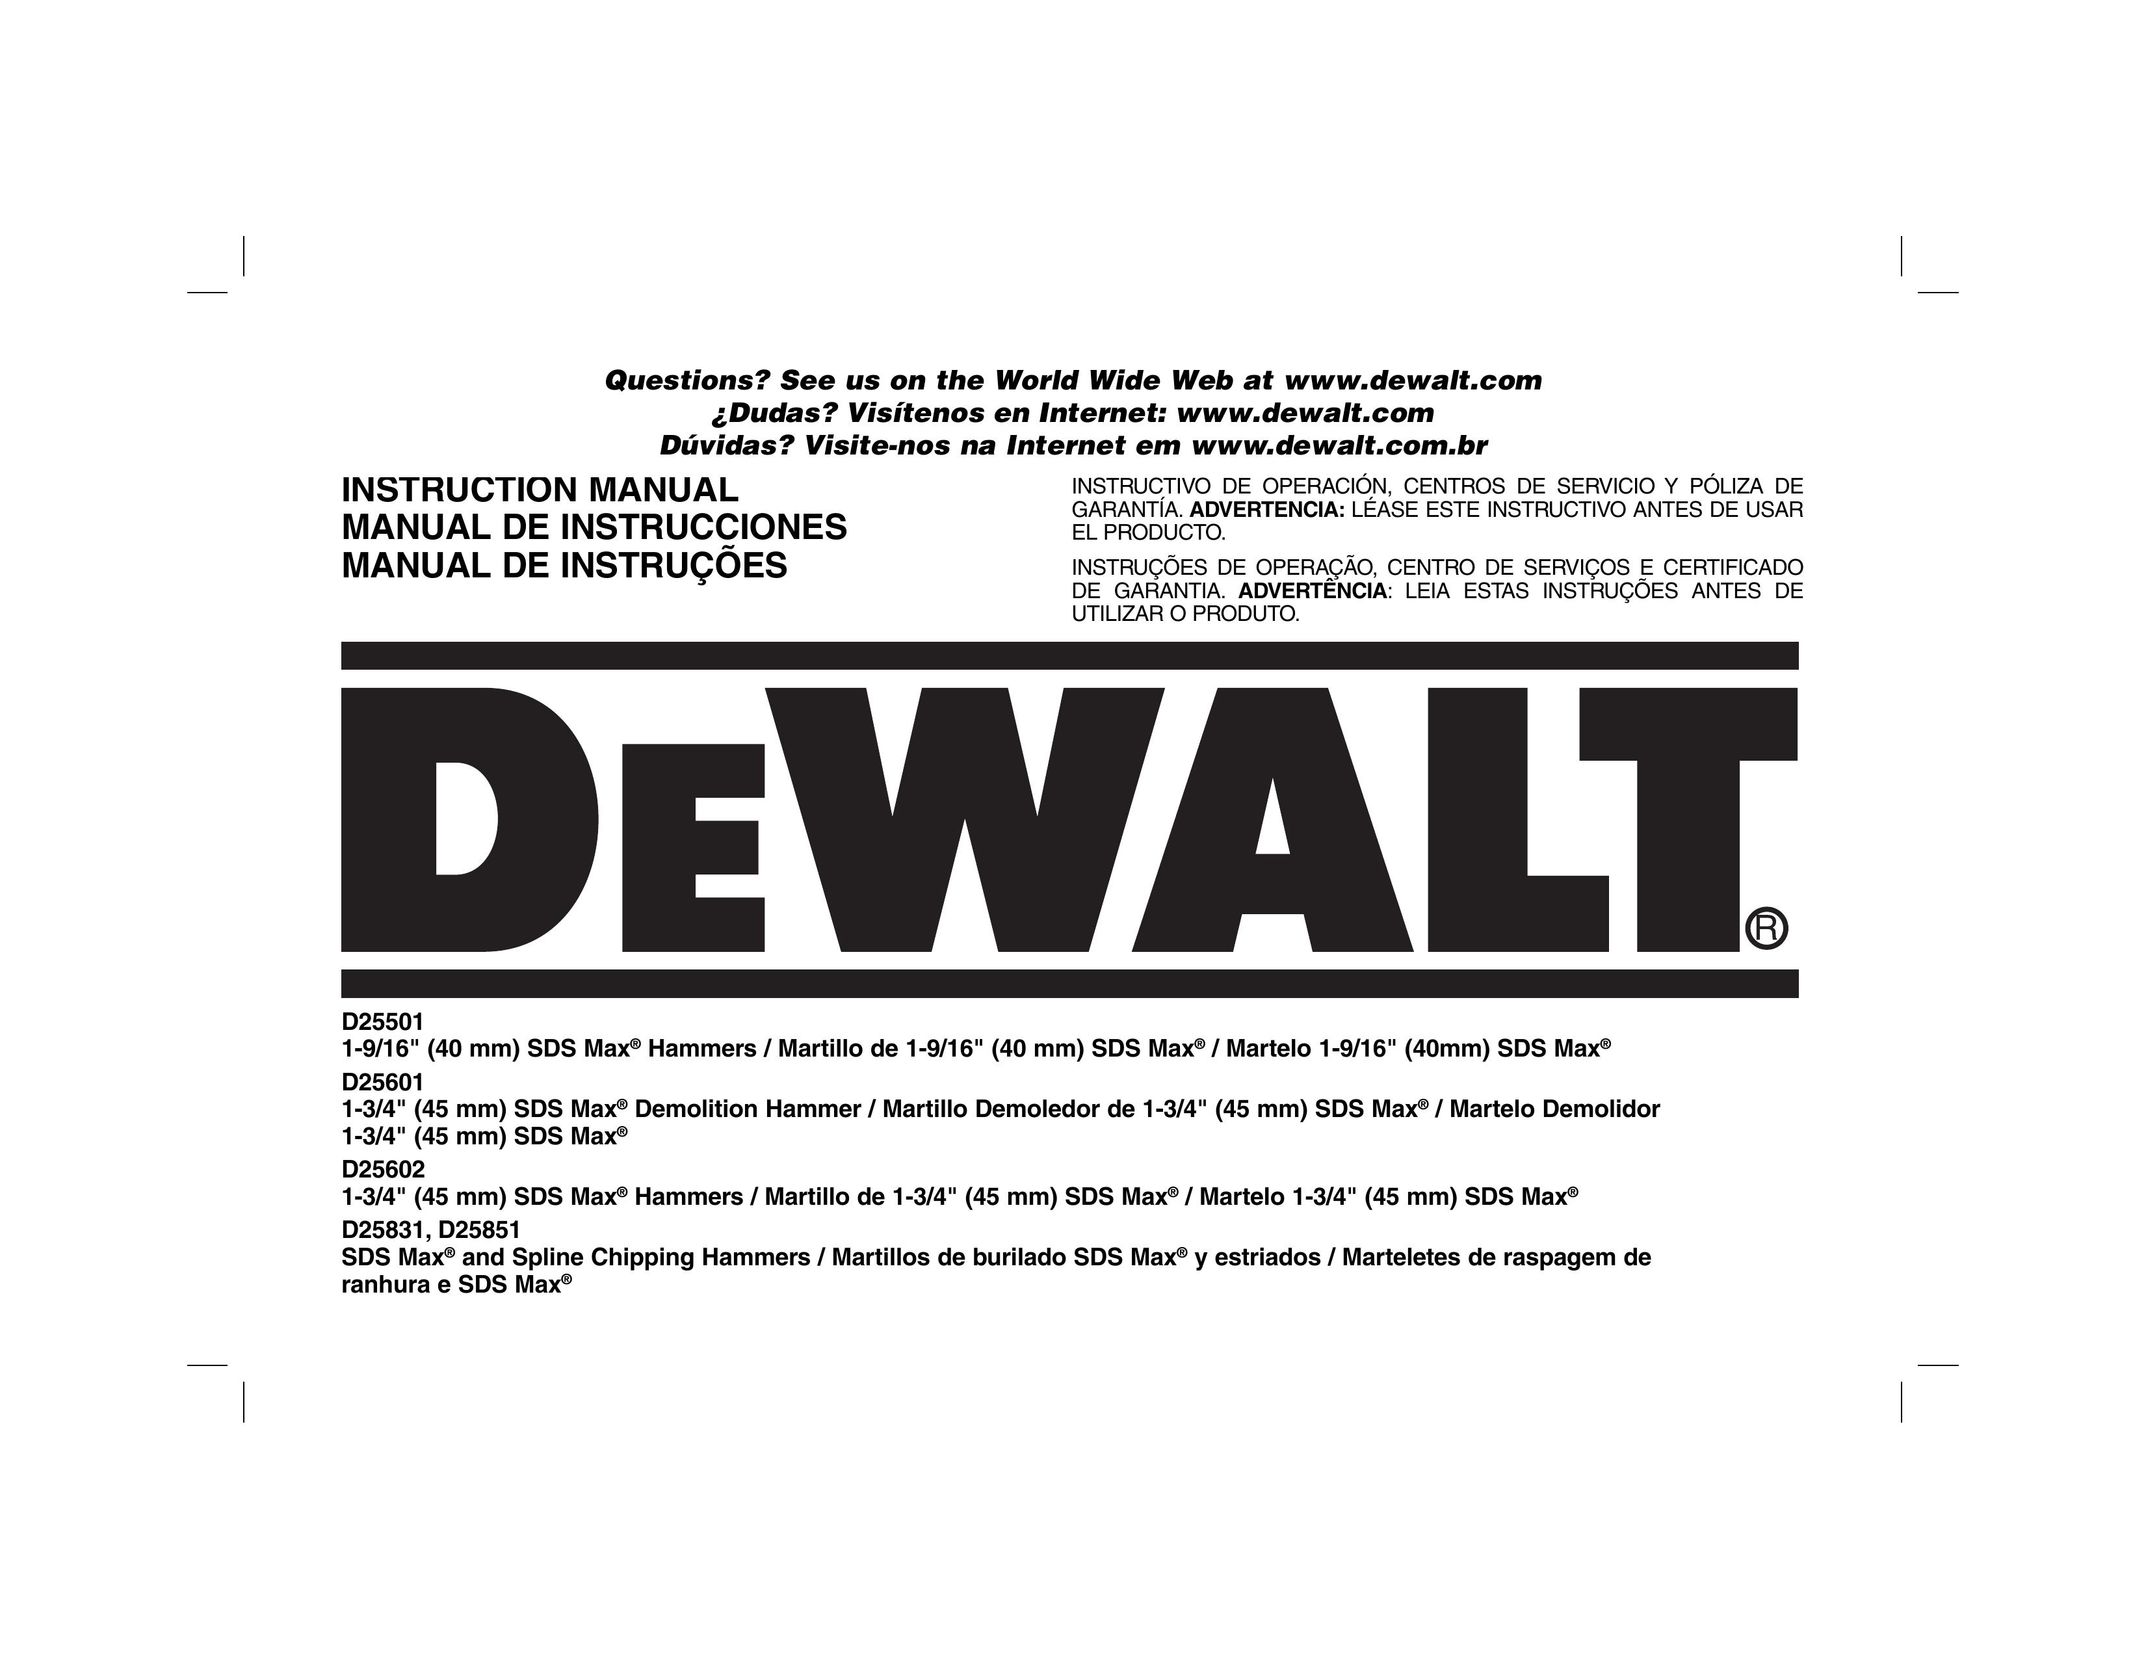 DeWalt D25851 Power Hammer User Manual